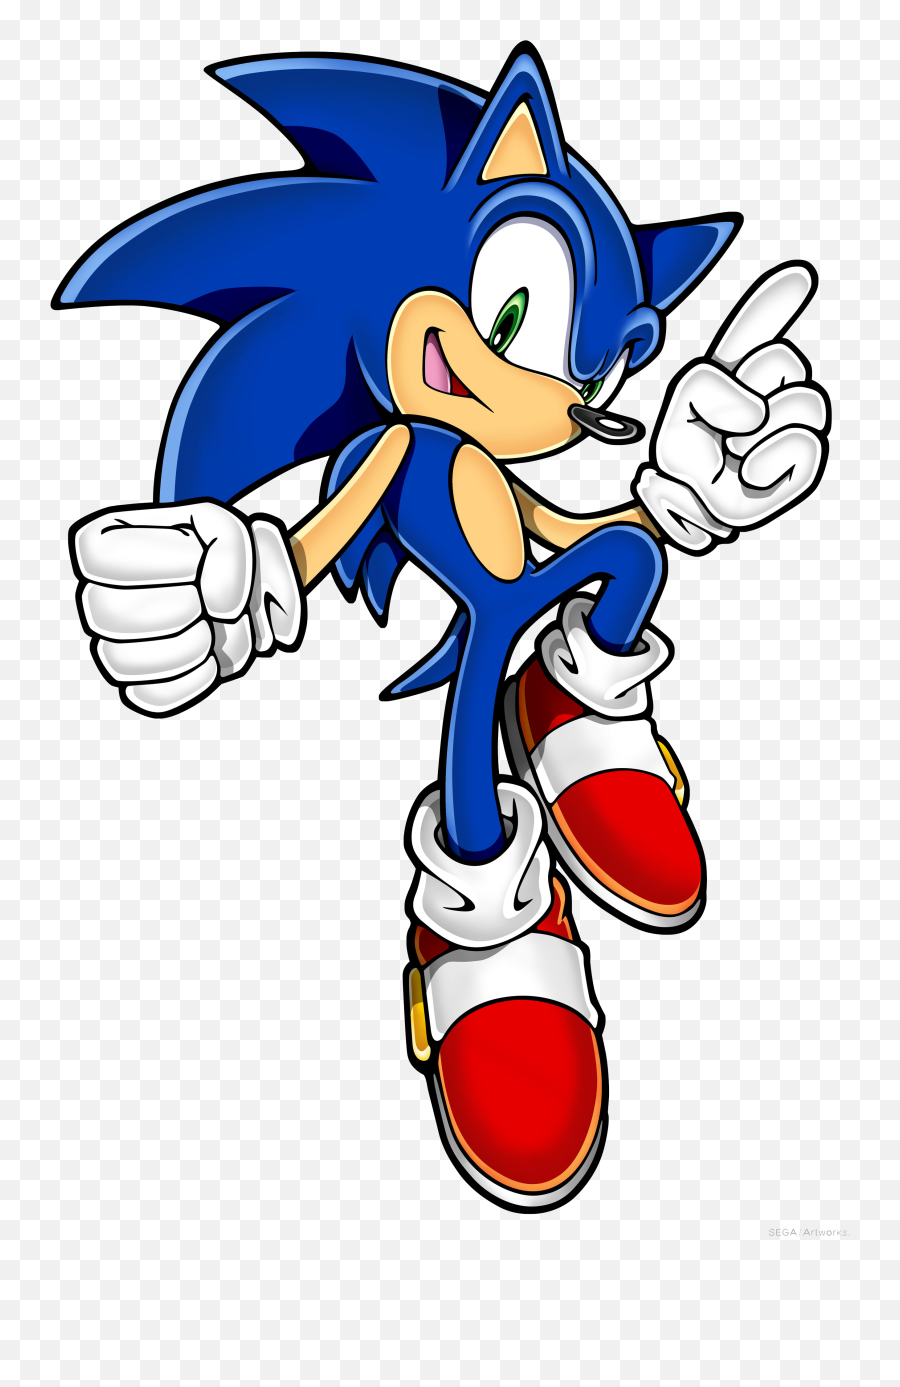 Sonic The Hedgehog 2 - Sonic The Hedgehog Small Png,Sonic The Hedgehog 2 Logo